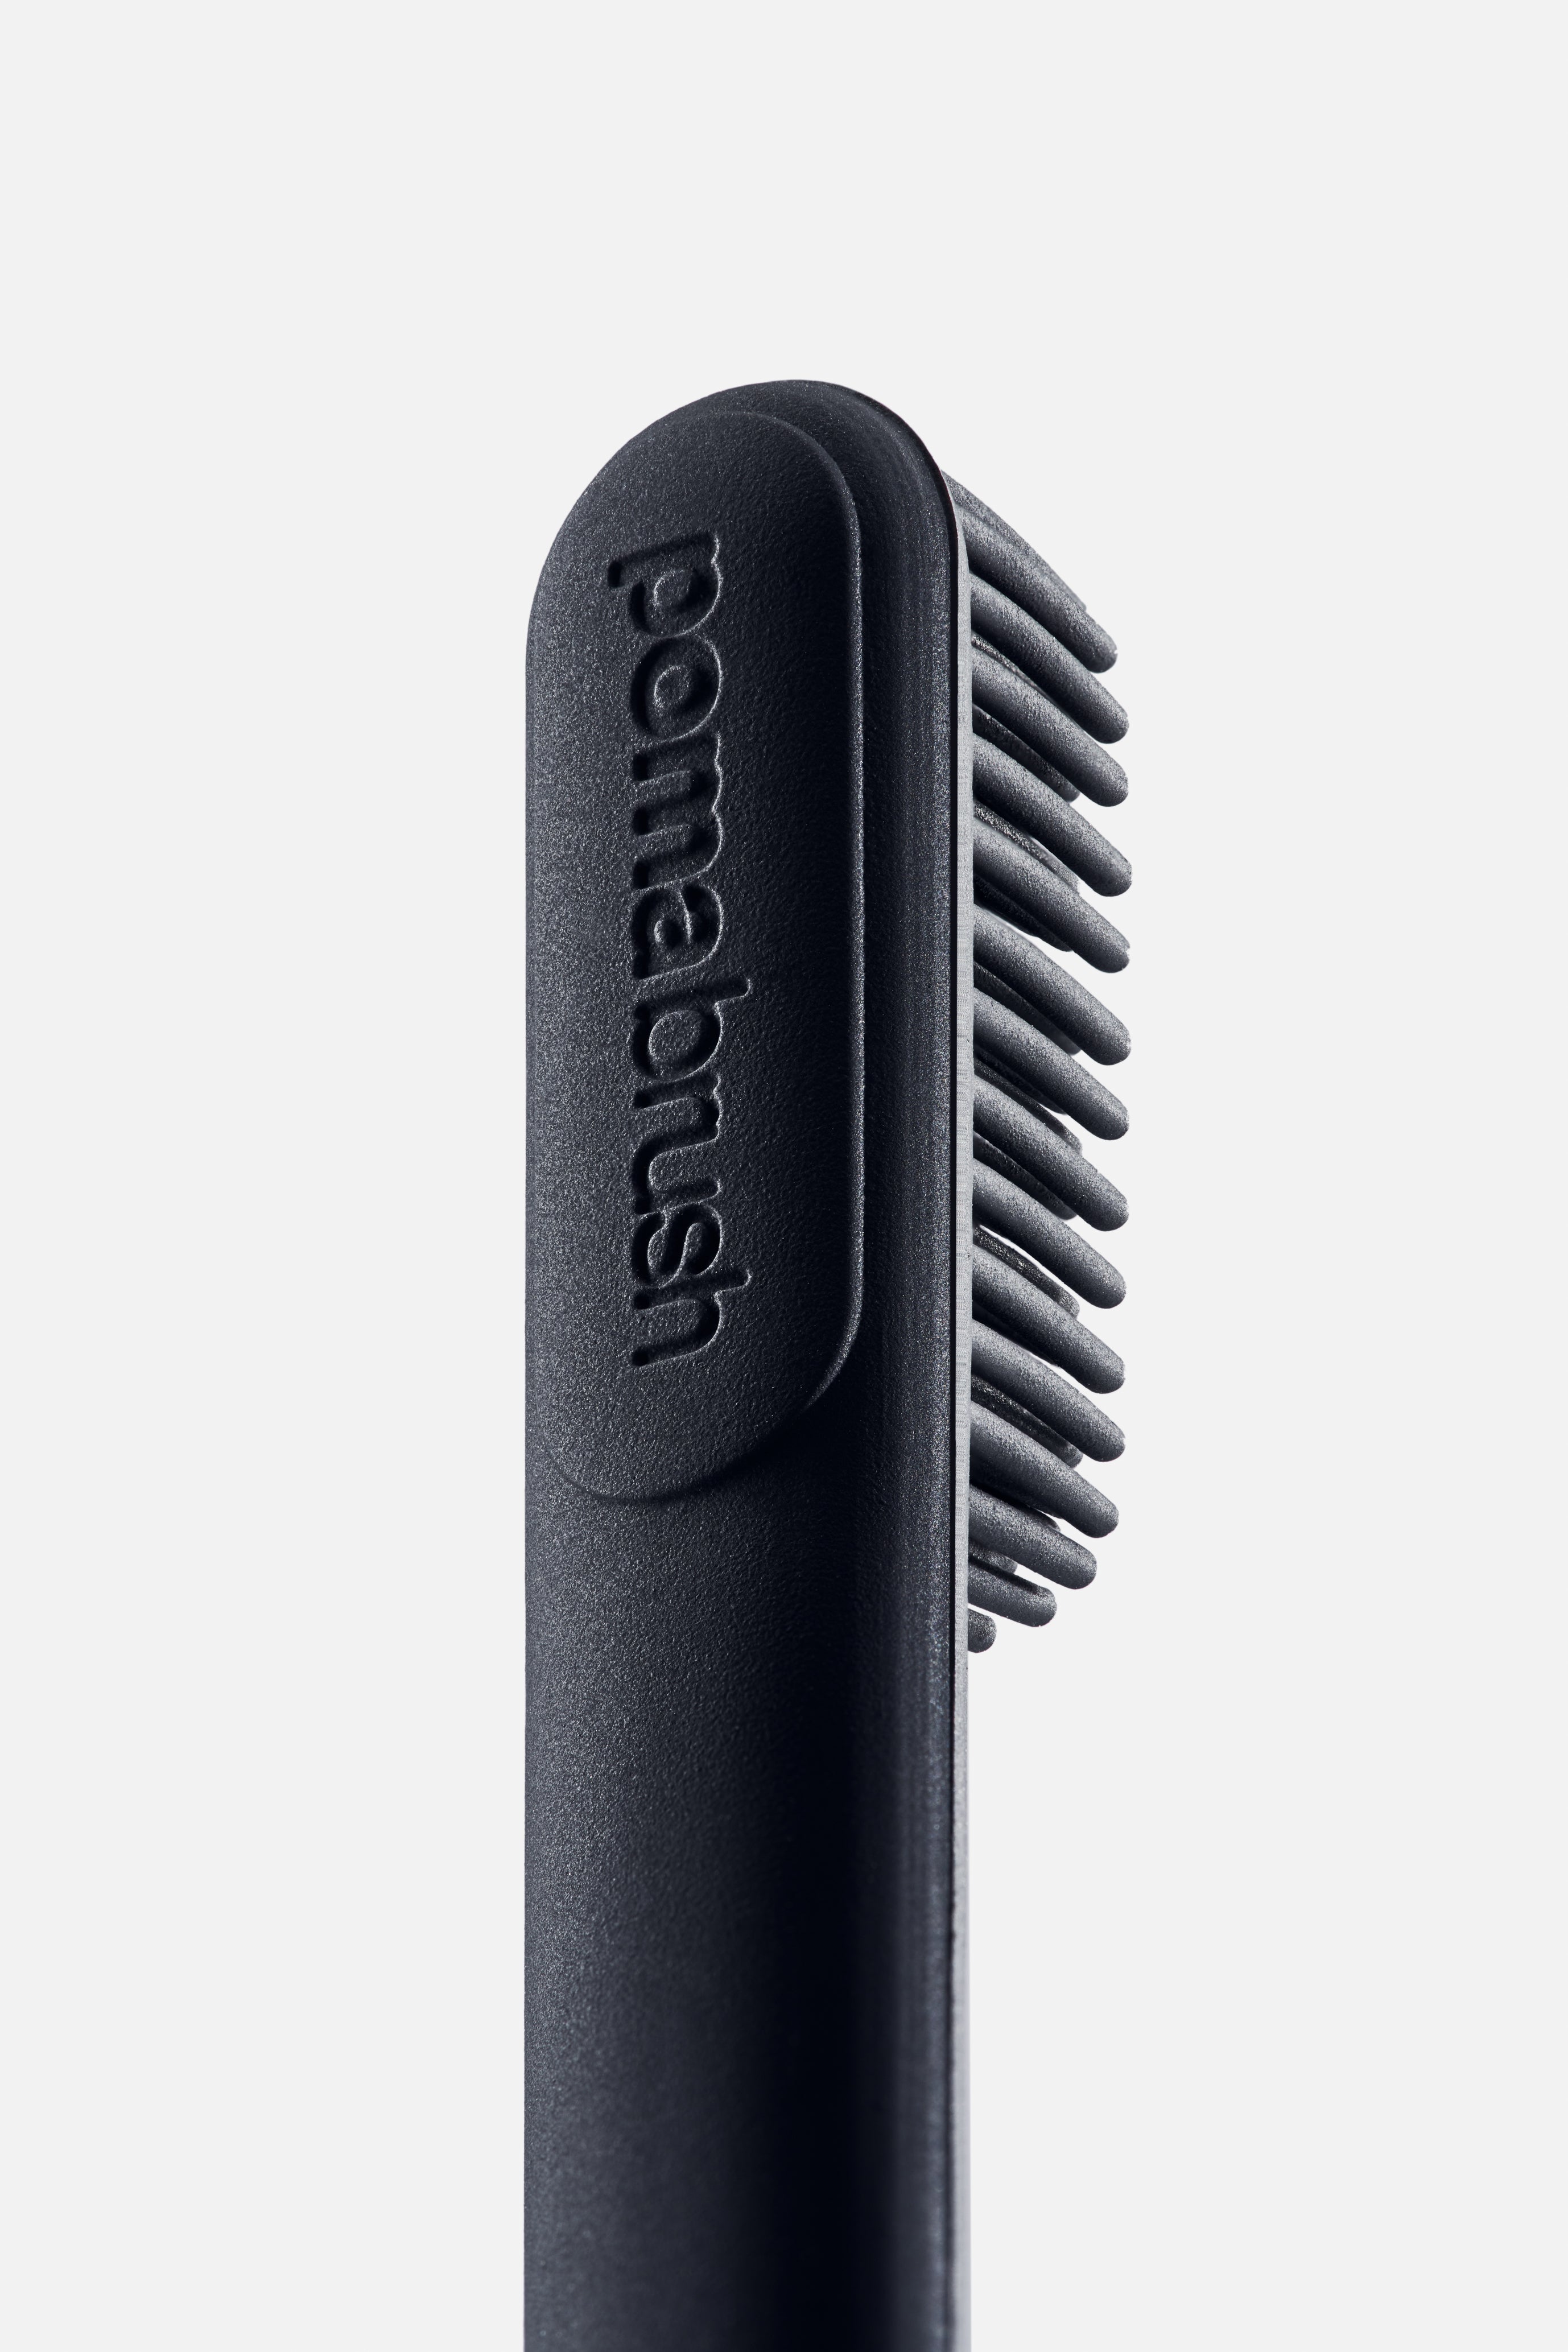 Pomabrush - Nylon-Silicone Brush Heads - Black (Pack of 4)